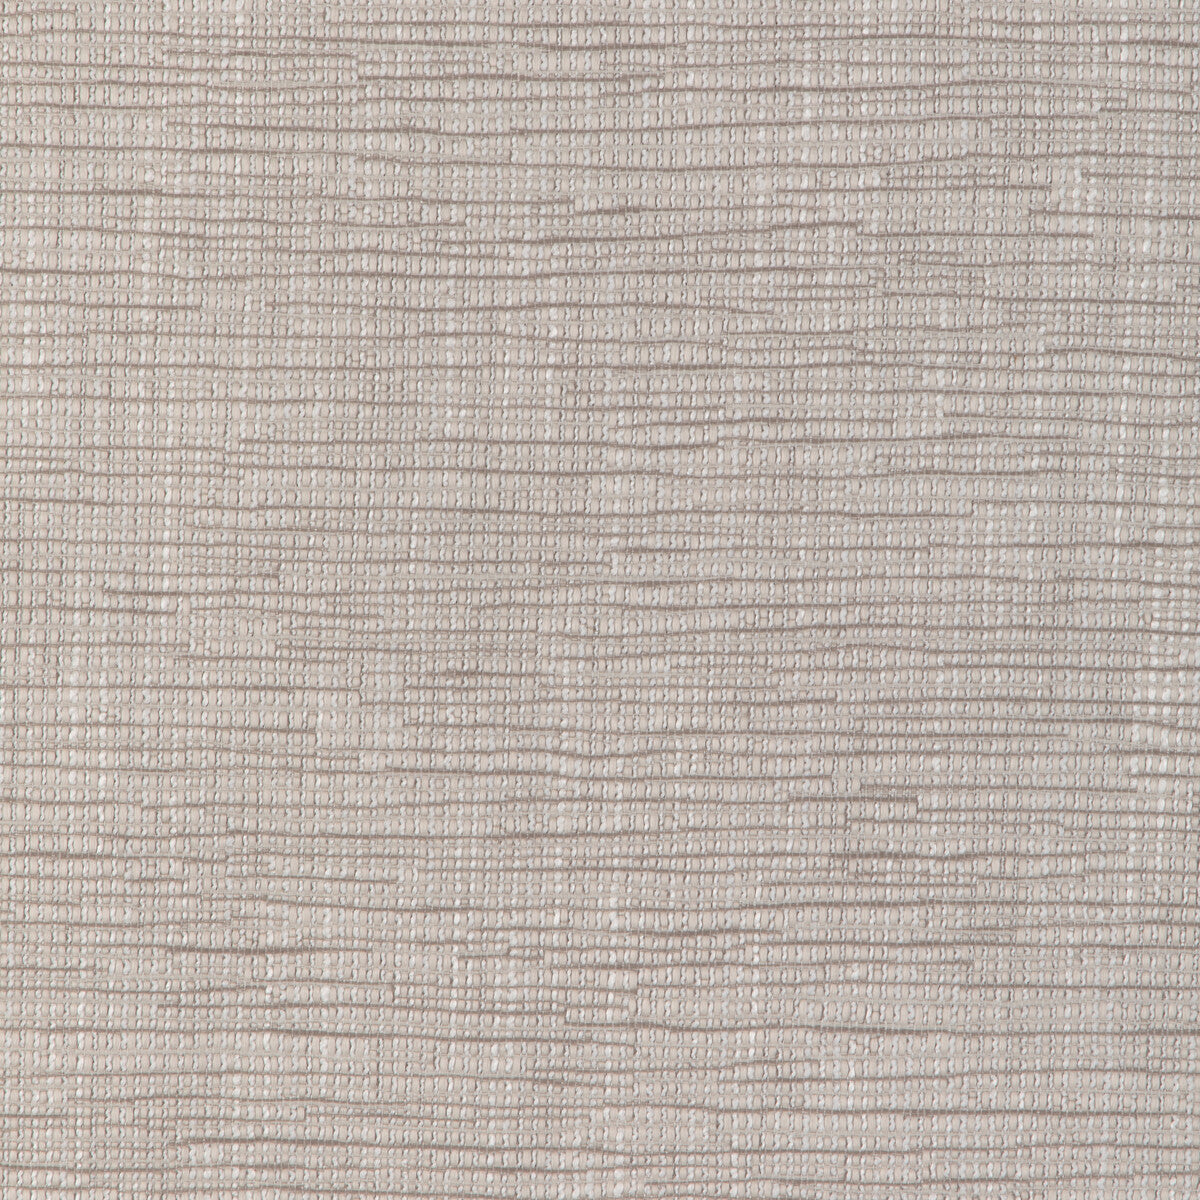 Kravet Smart fabric in 36668-1101 color - pattern 36668.1101.0 - by Kravet Smart in the Performance Kravetarmor collection